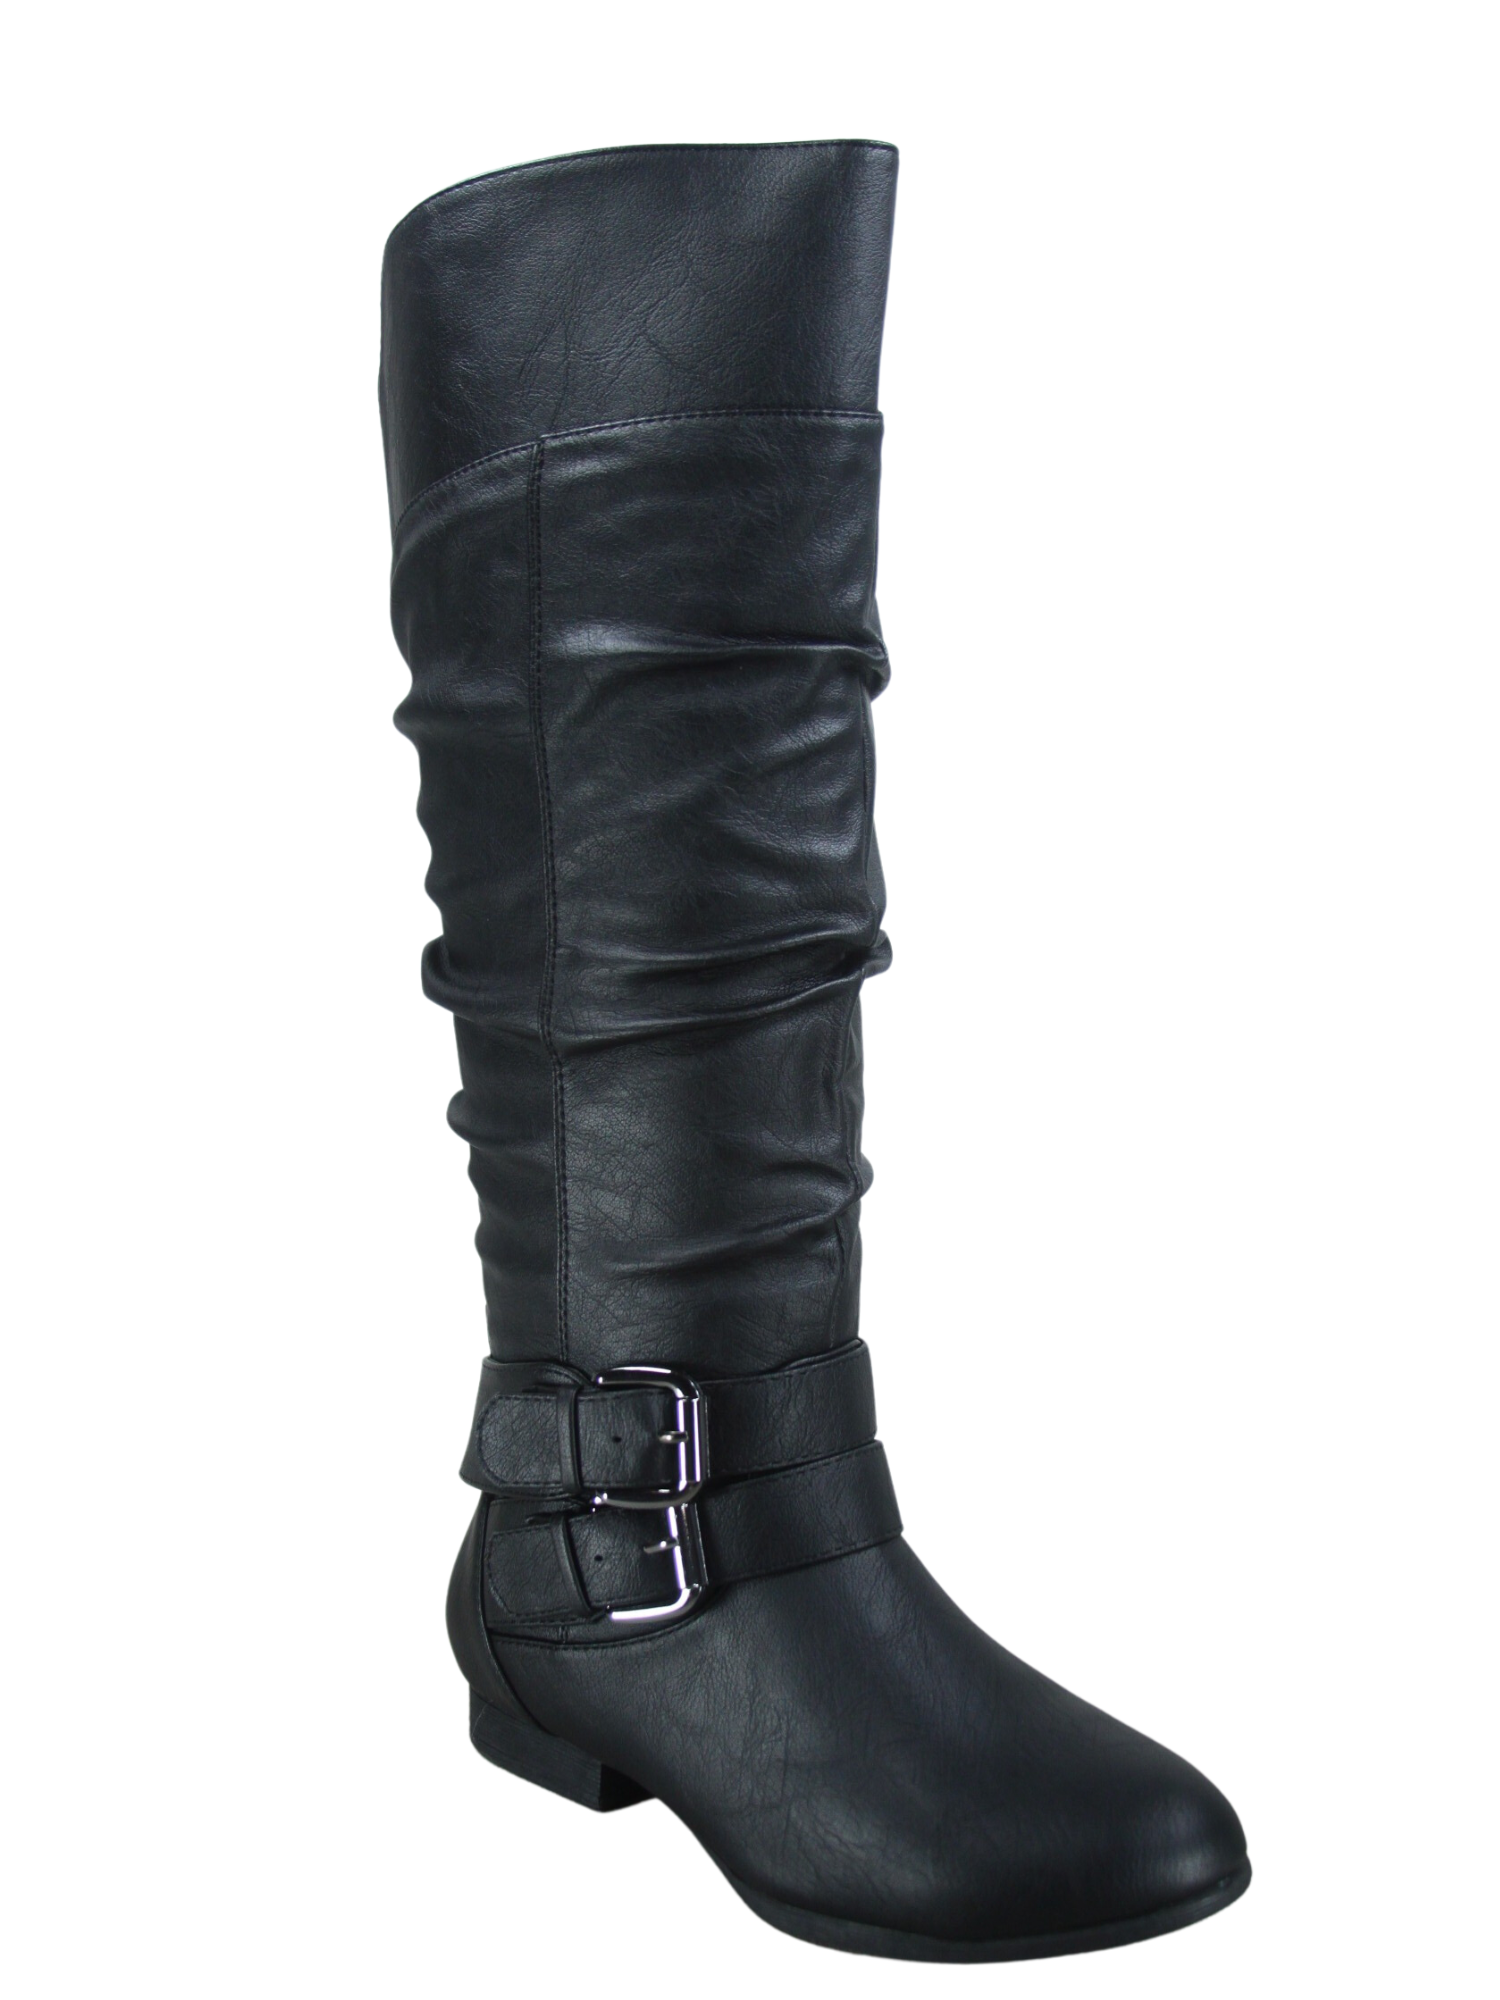 Tawop Black Boots Shoes Wedge Heel Flat Side Zipper Round Toe Solid ...